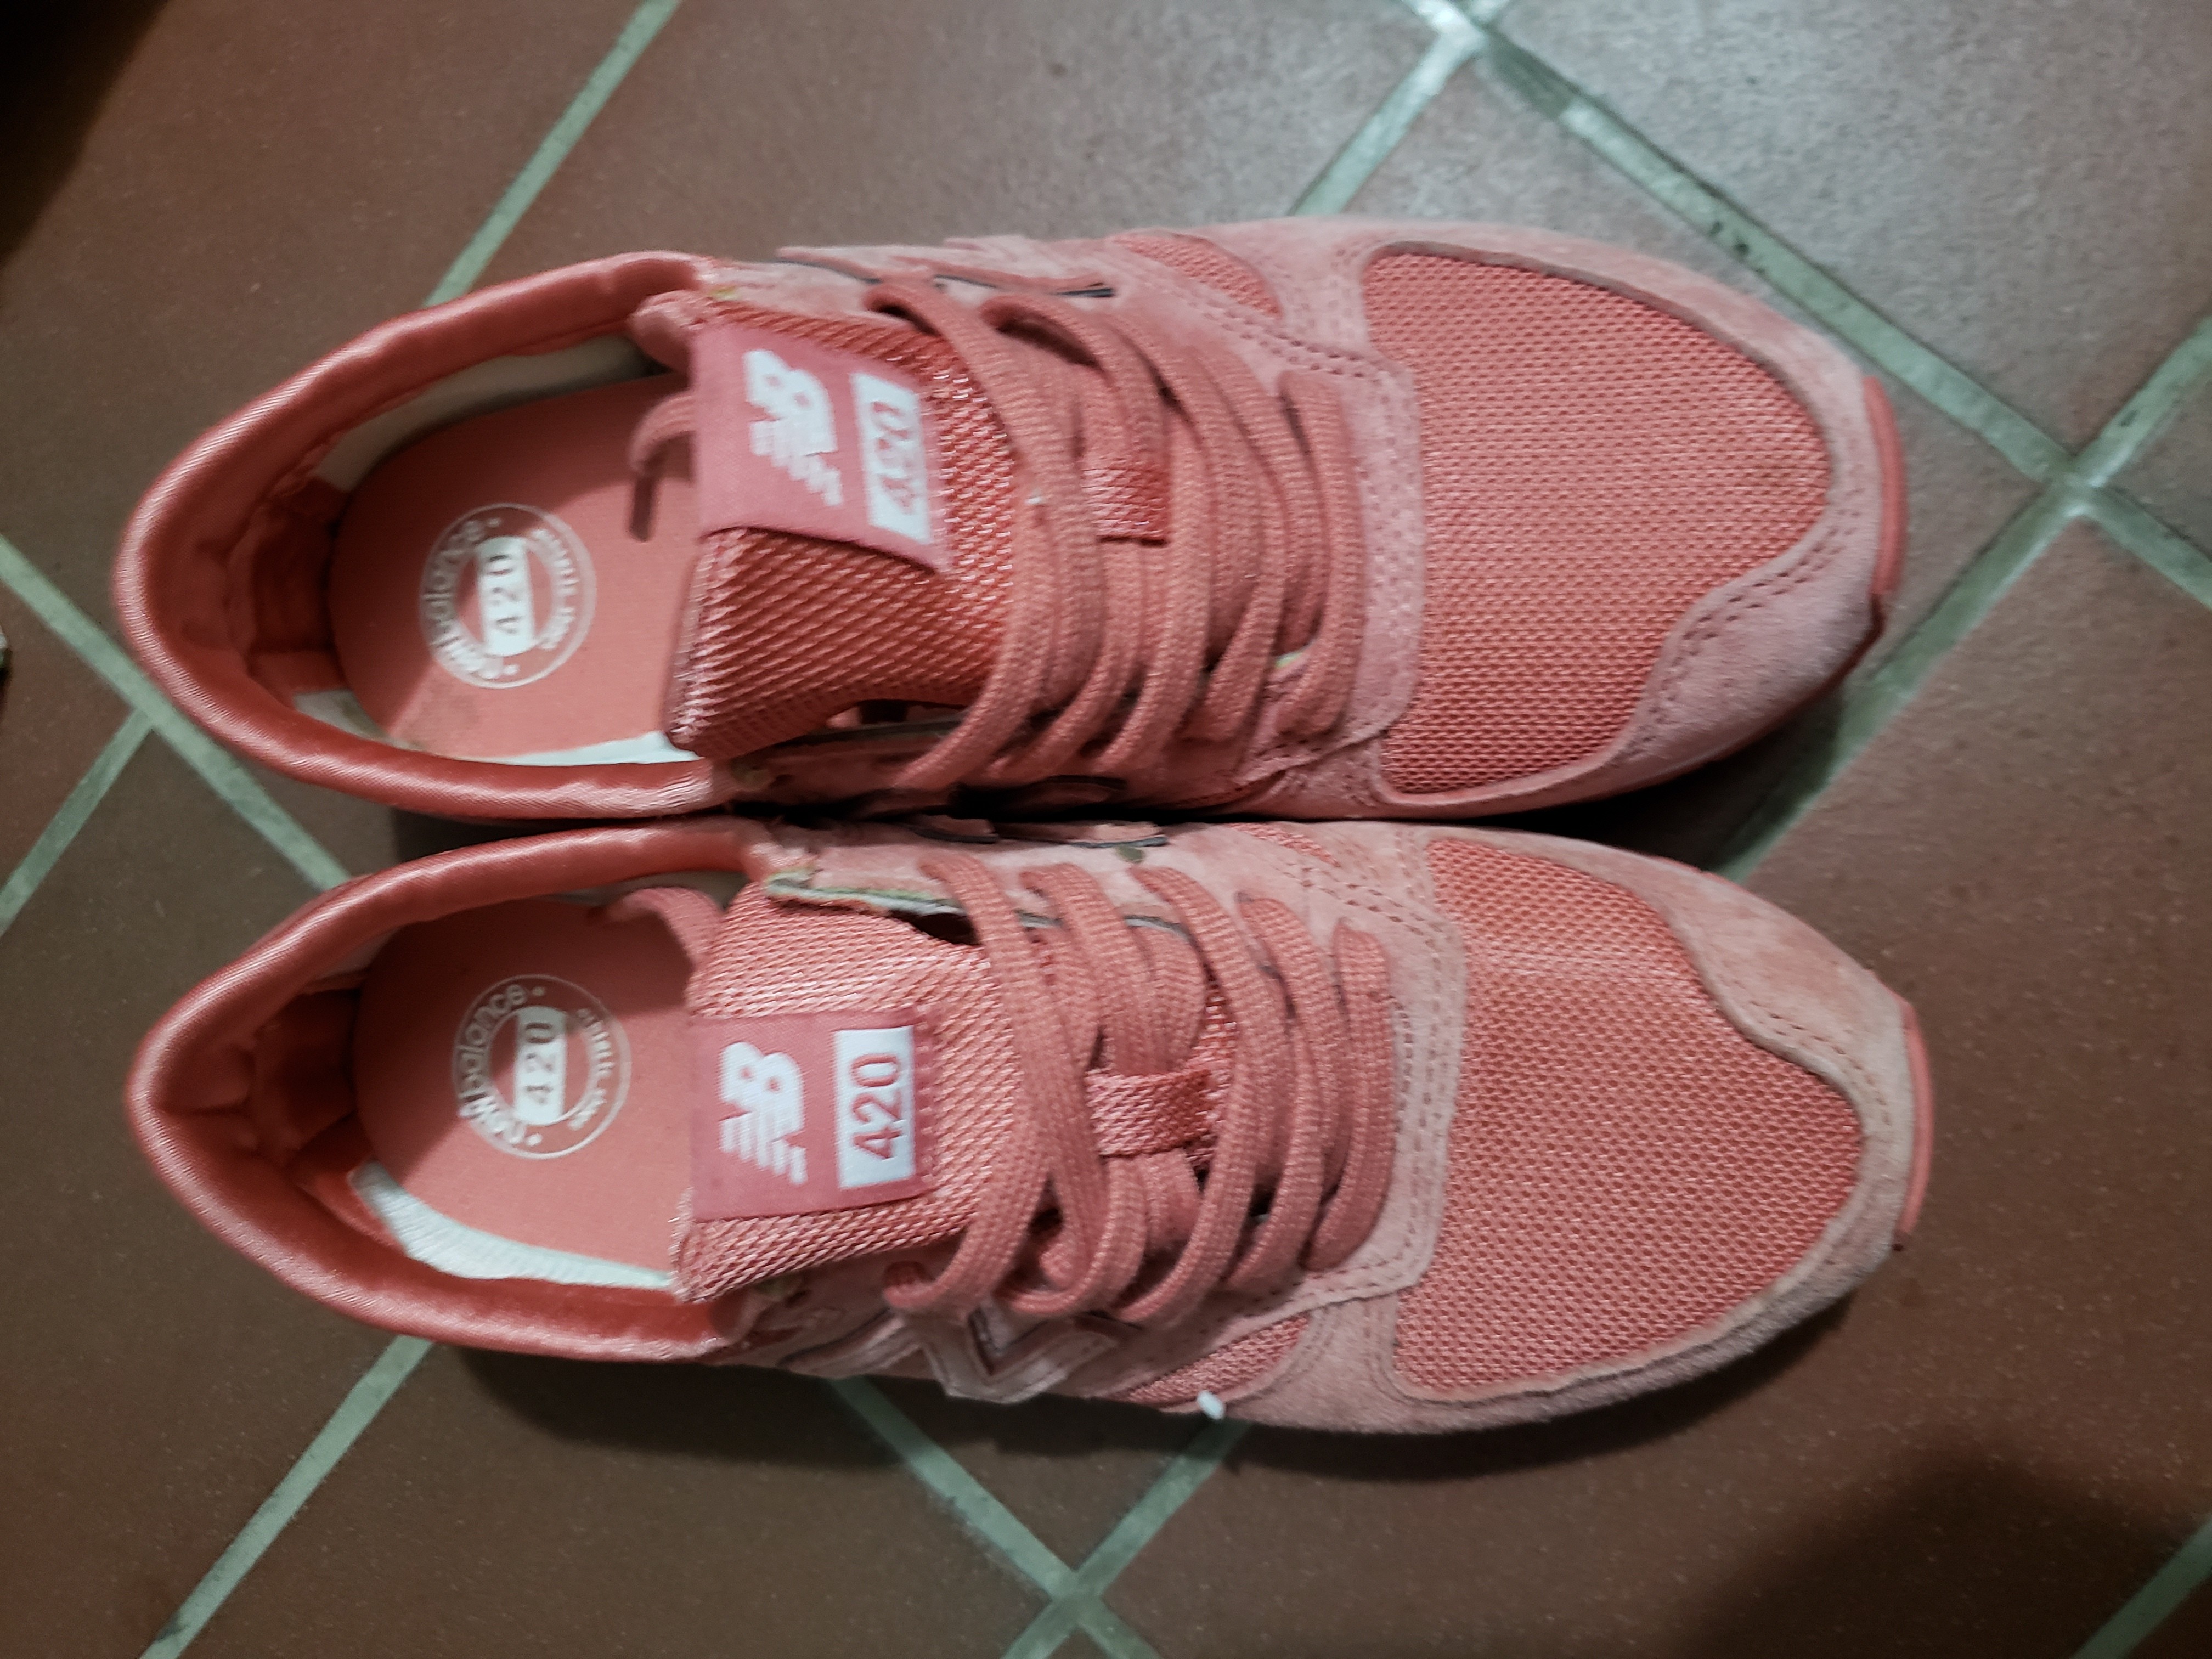 new balance pink tennis shoes